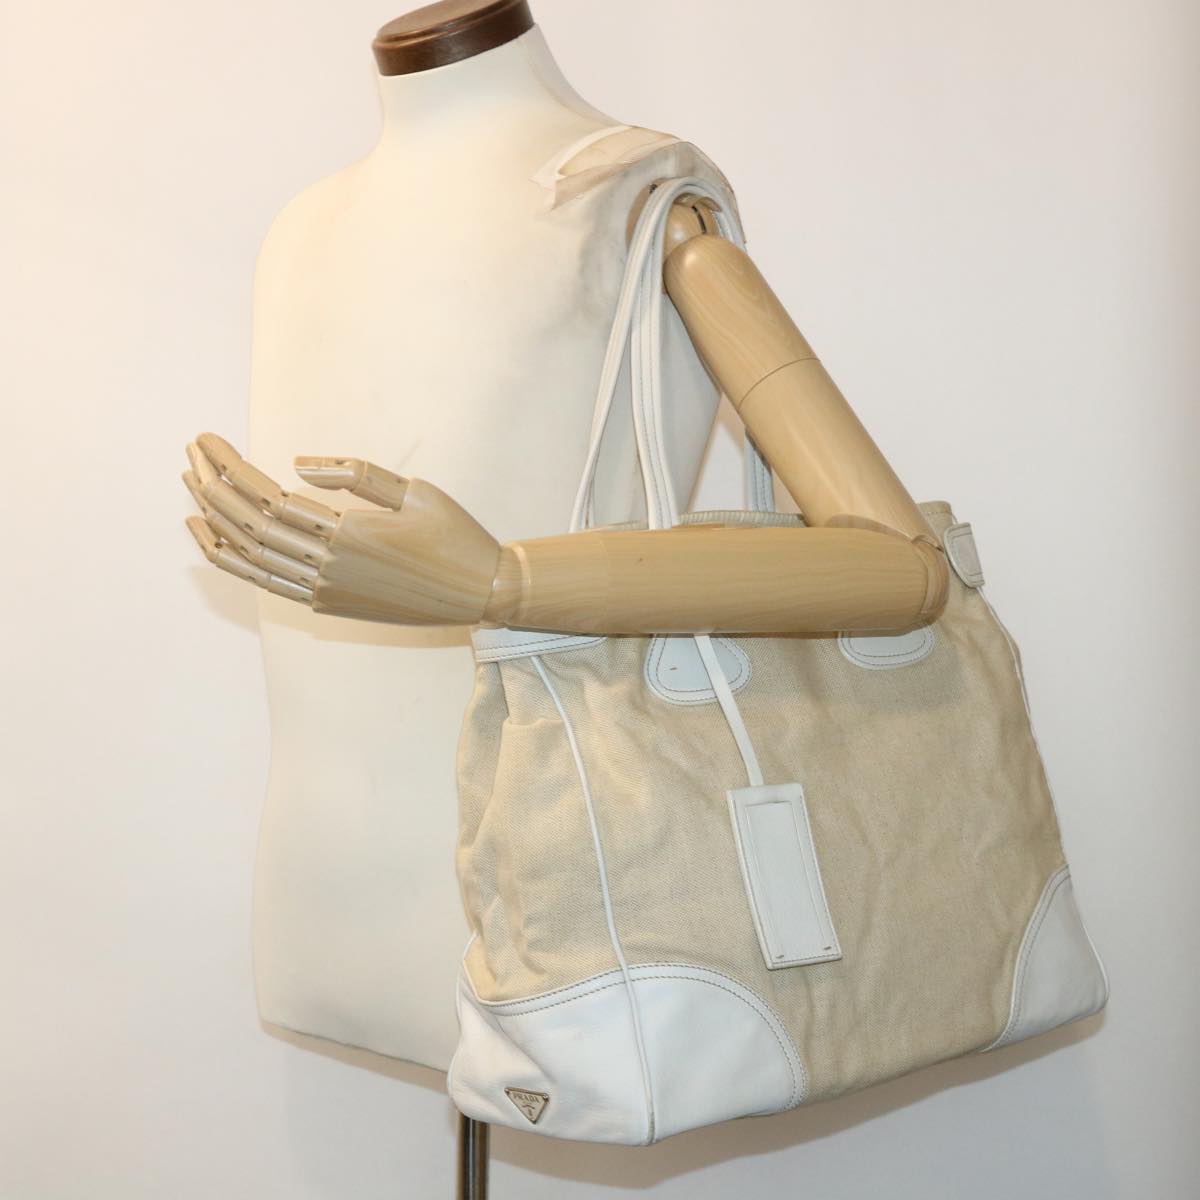 PRADA Shoulder Bag Canvas Leather Beige White Auth cl663